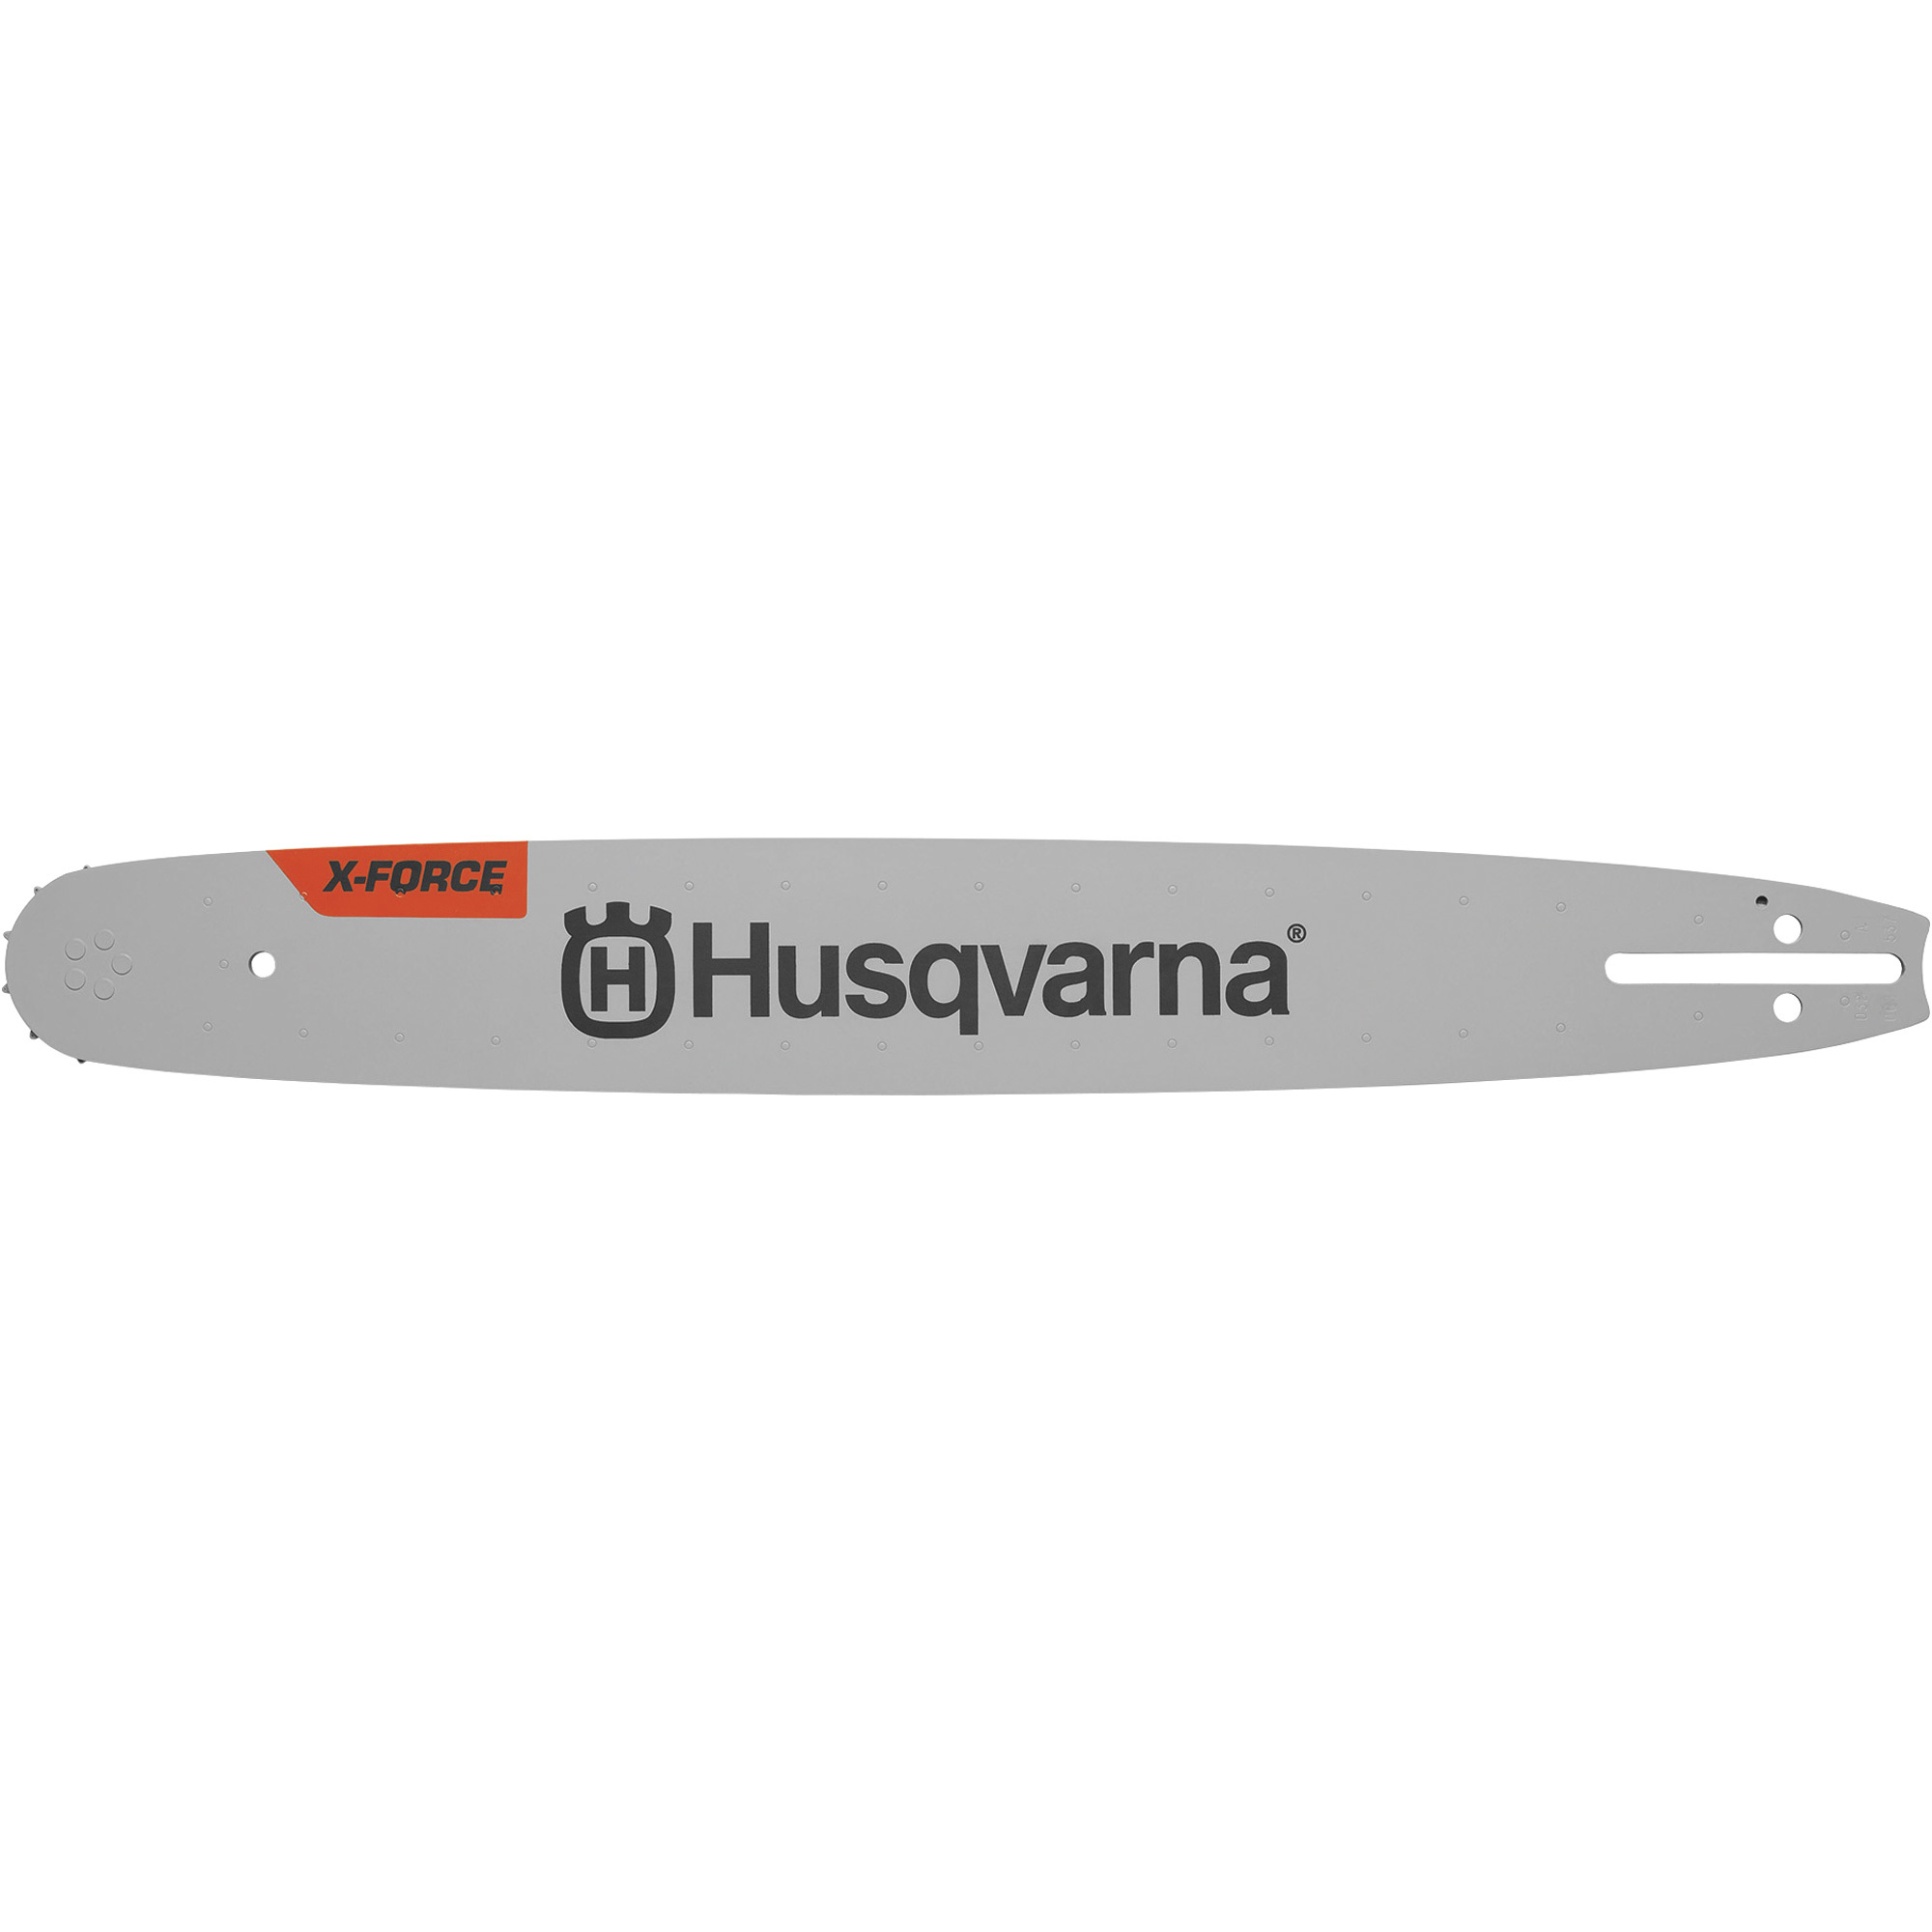 Husqvarna X-Force Chainsaw Guide Bar â 20Inch Bar Length, 0.325Inch Pitch, Model X-Force